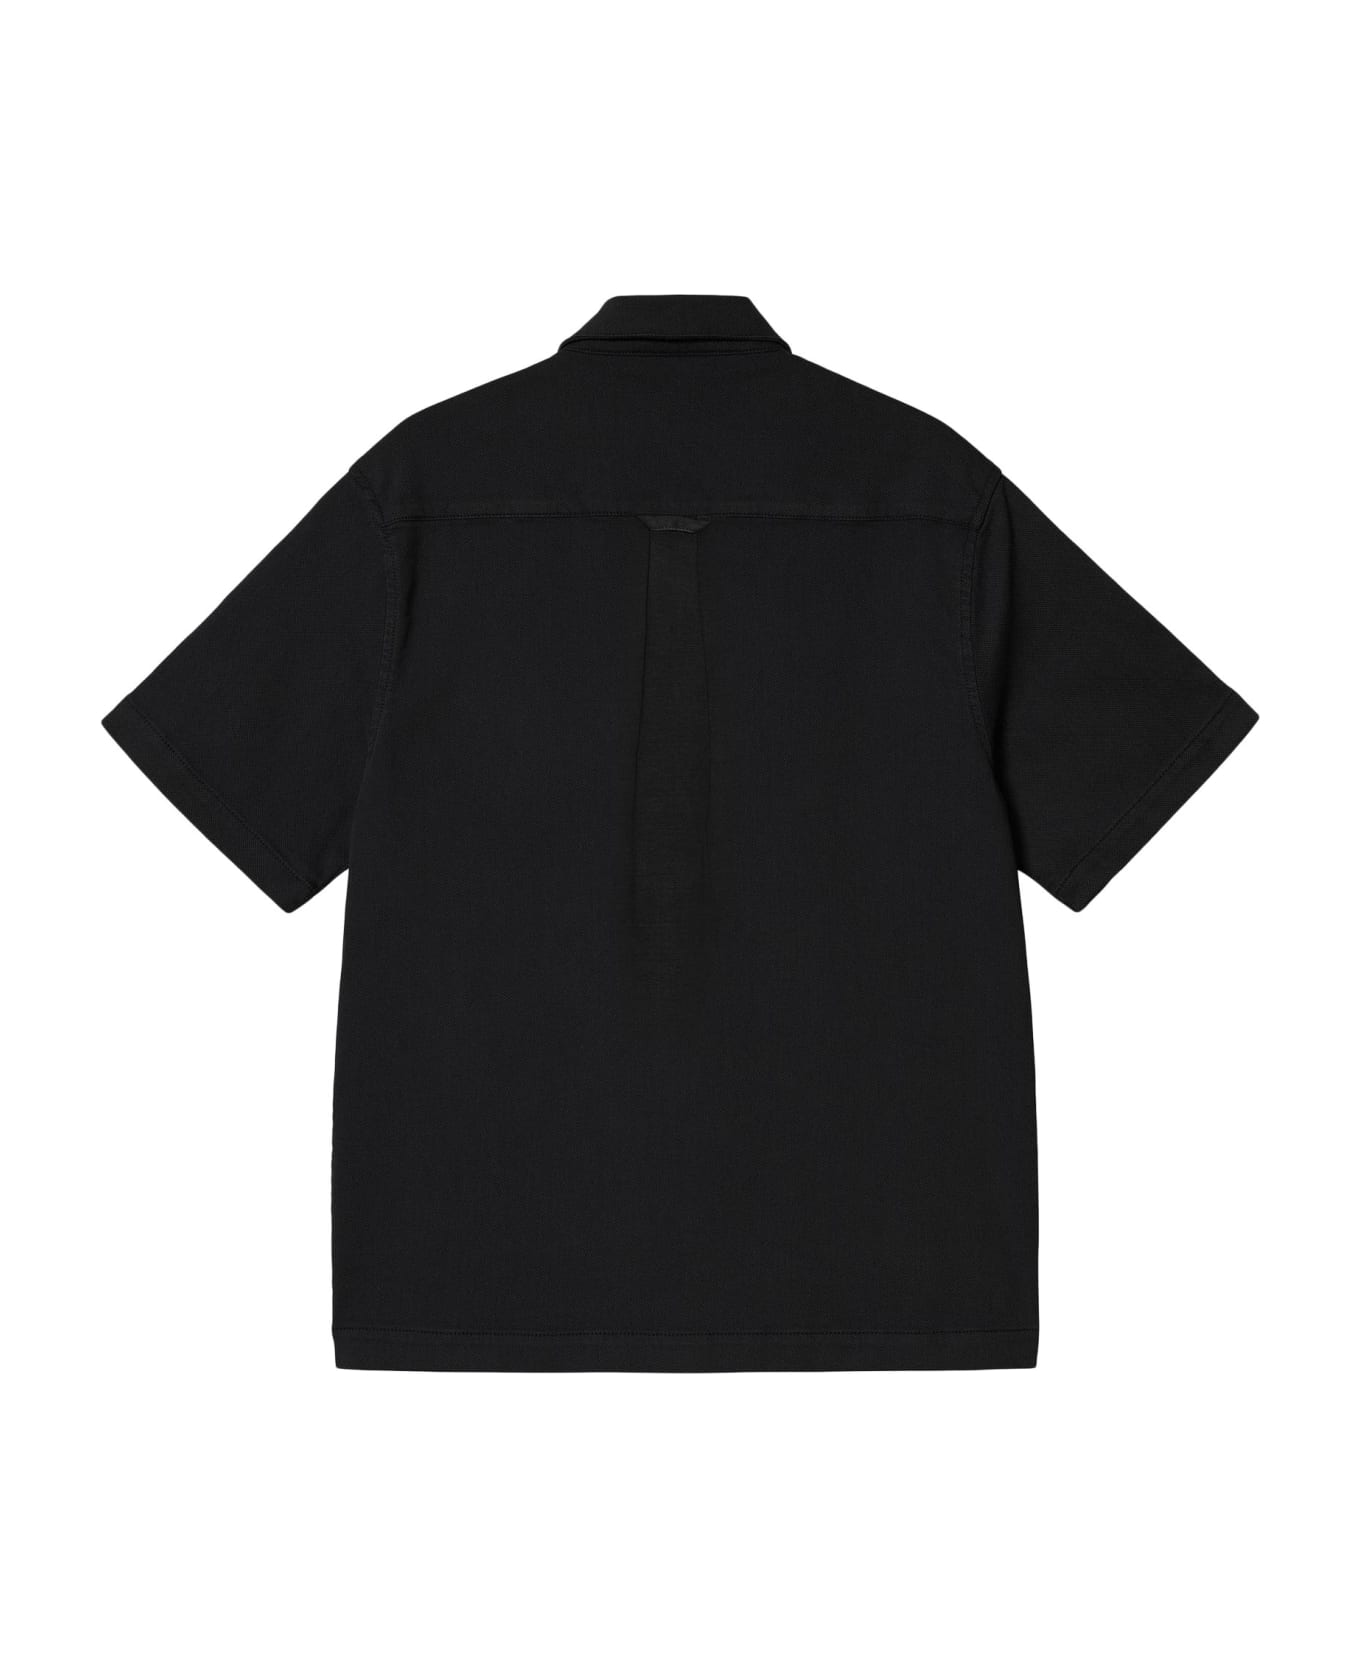 Carhartt Shirts Black - Black シャツ